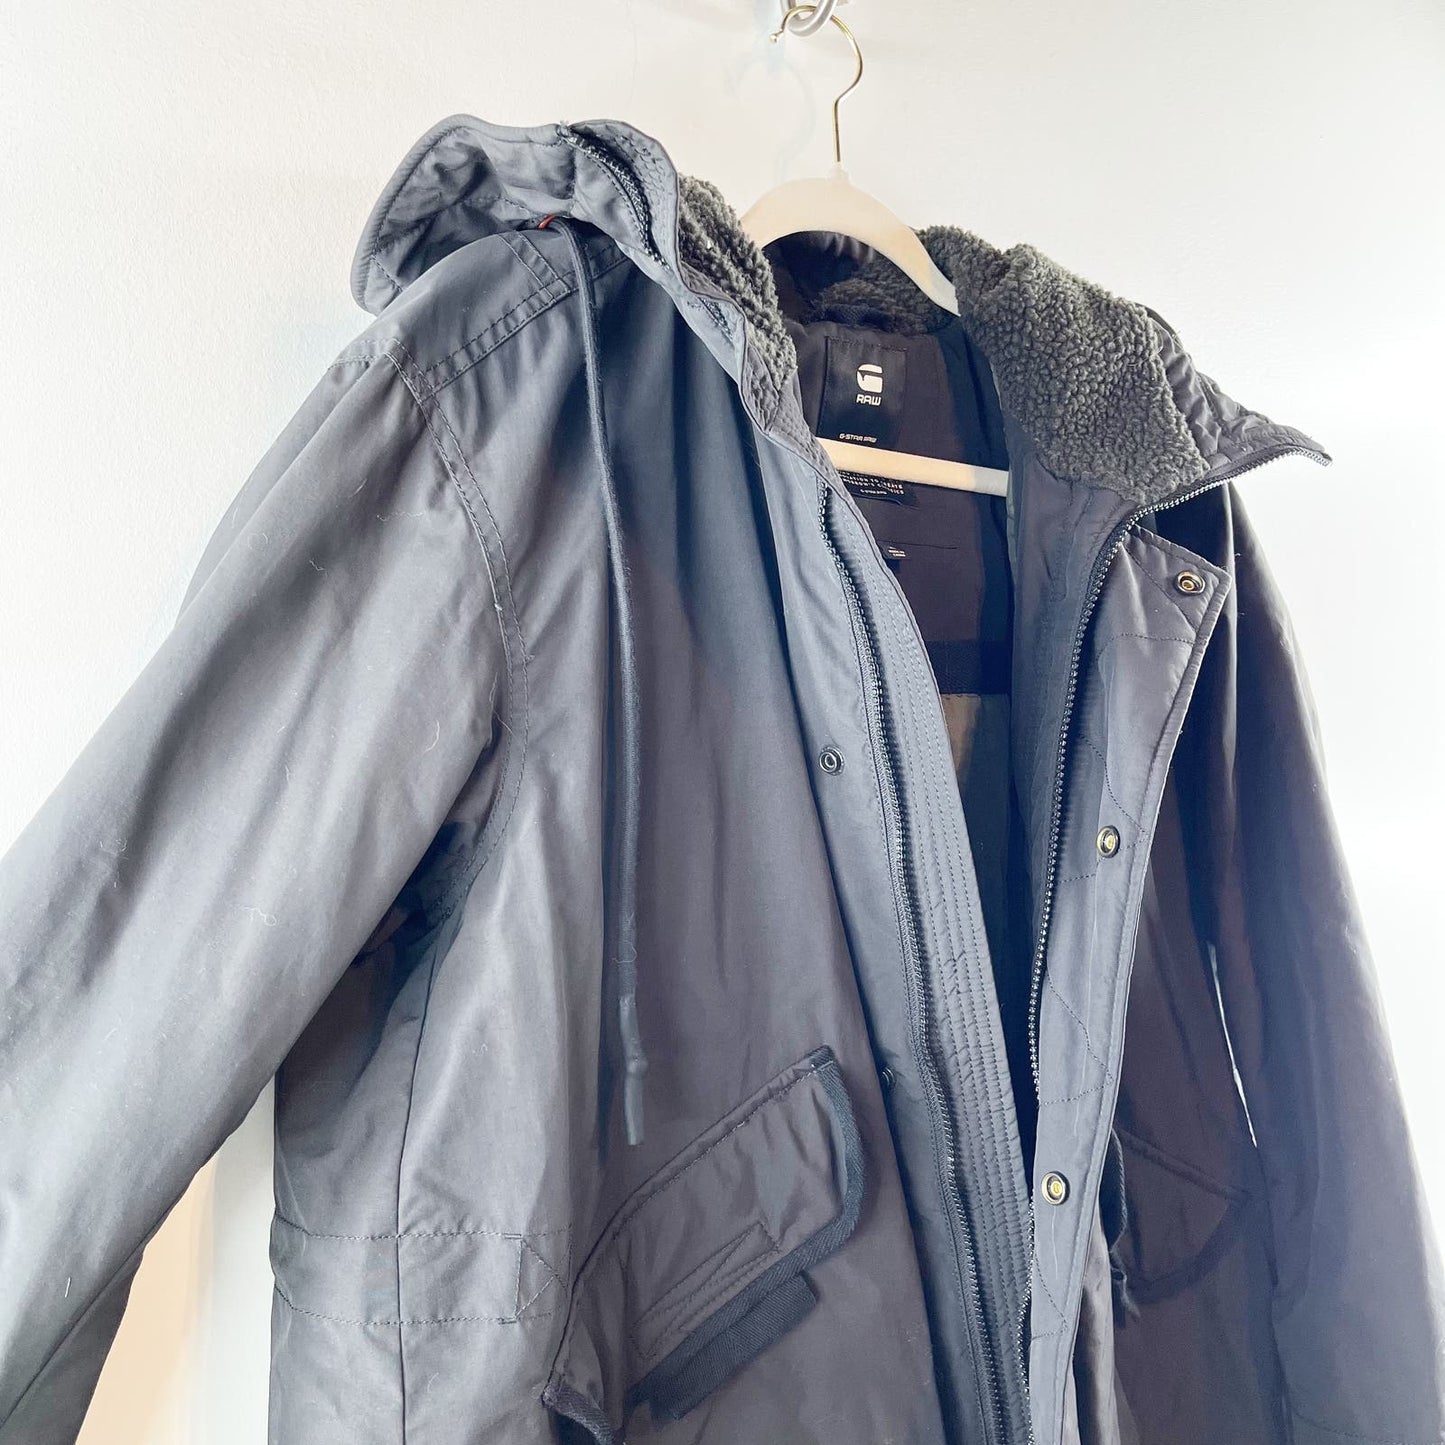 G Star Raw Hooded Fishtail Parka Winter Coat Jacket Black XL